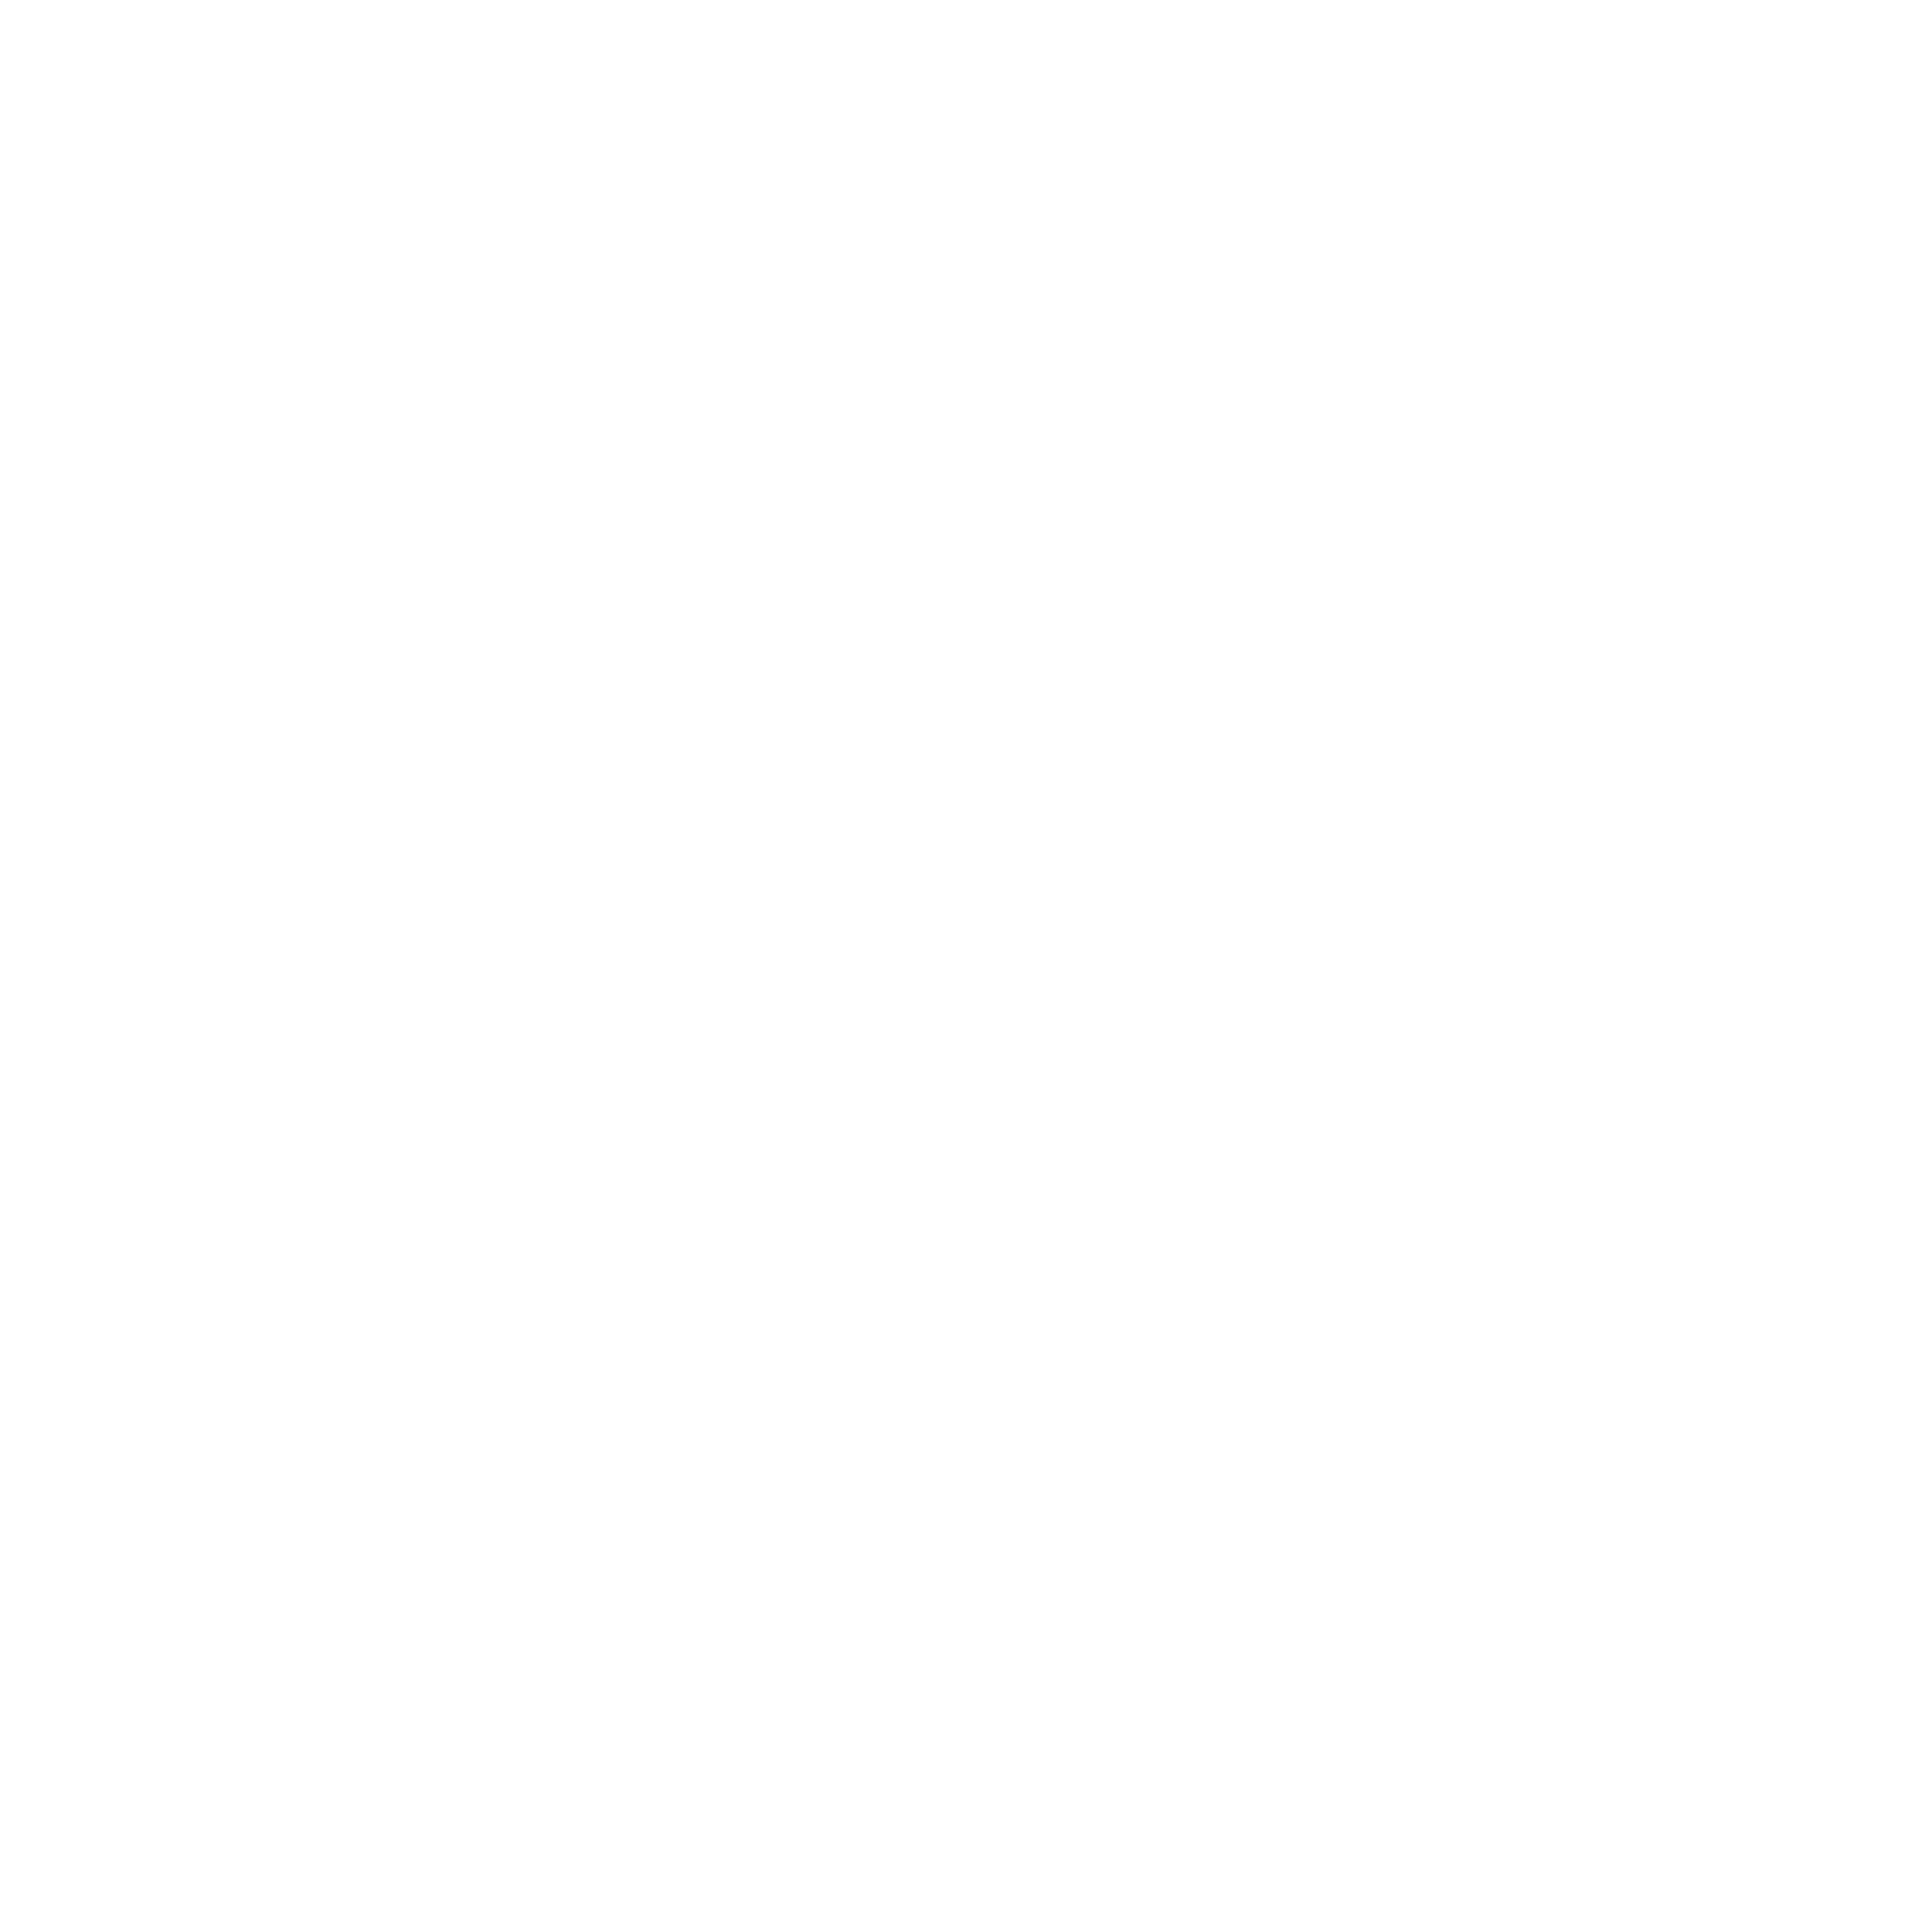 Zyrtec Logo - Zyrtec Logo PNG Transparent & SVG Vector